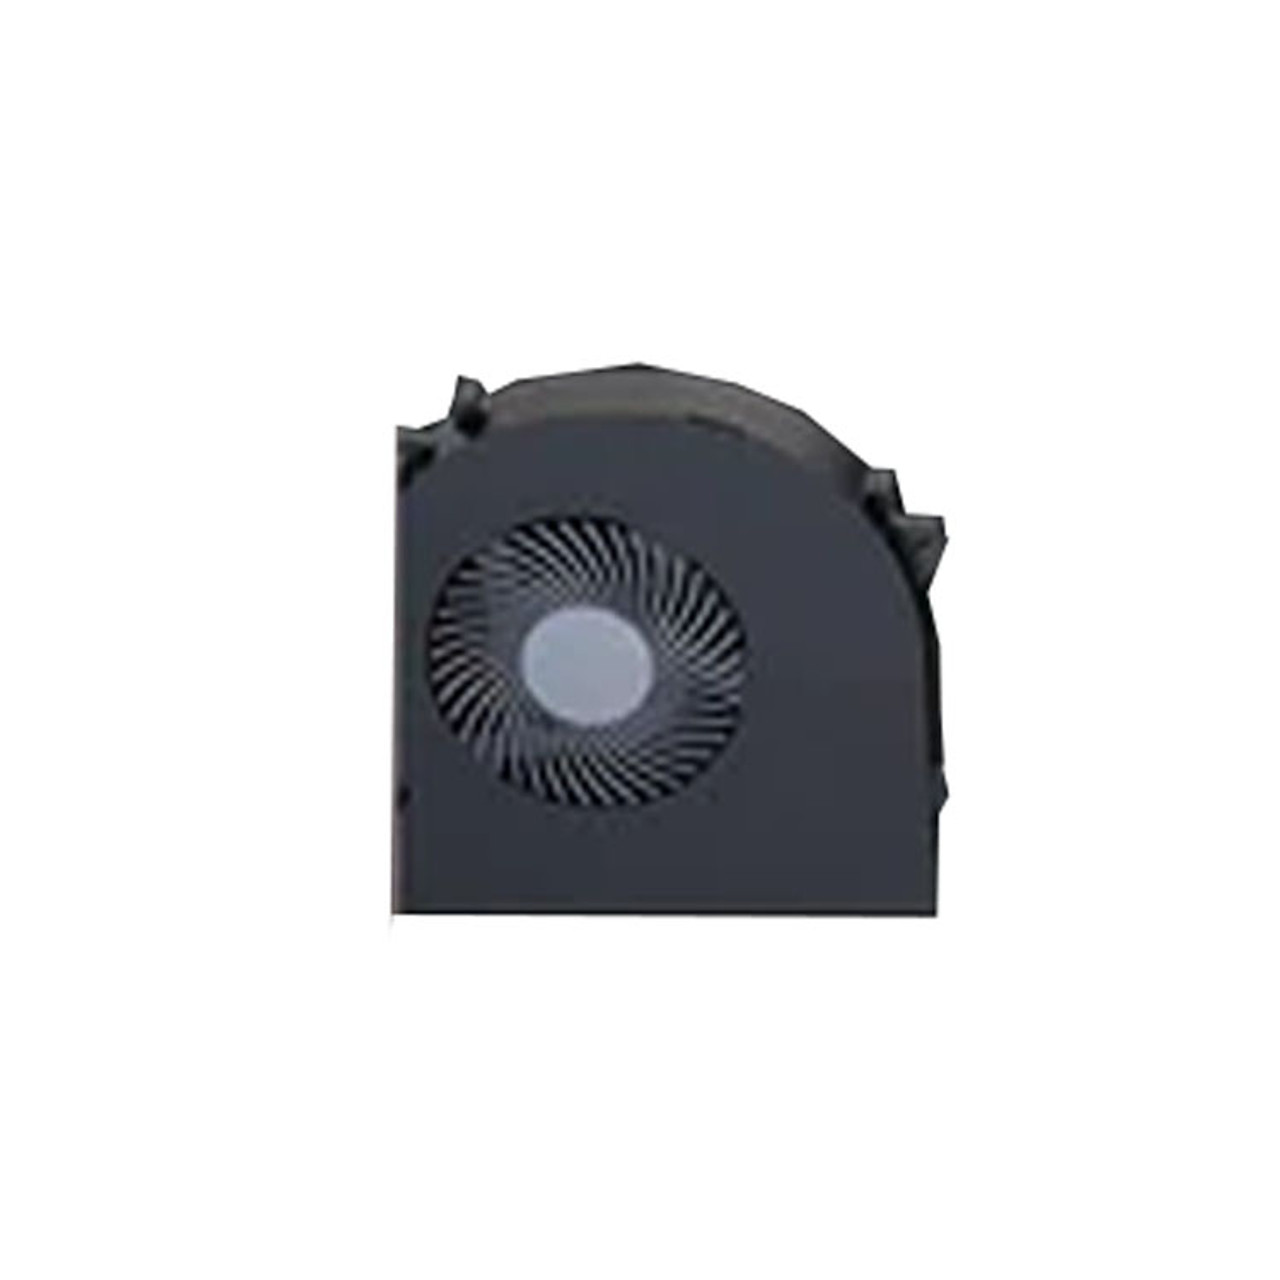 Mini PC CPU Fan For AceMagic AM08 Pro New - Linda parts